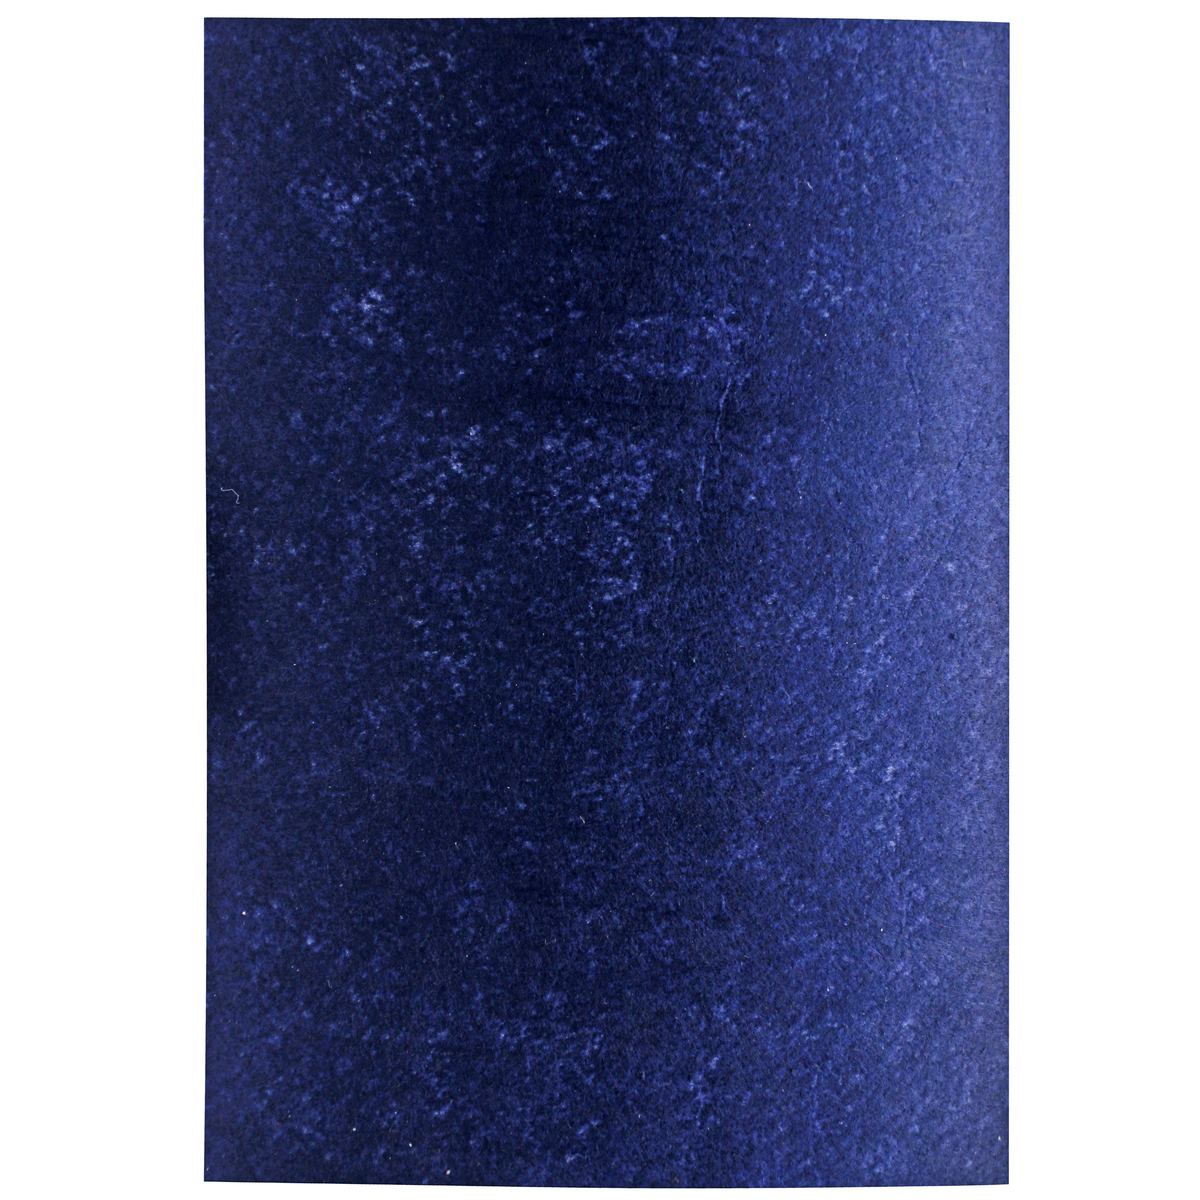 jags-mumbai Non-Woven & Felt Sheets A4 Nonwoven Felt Sheet Dark Blue ANFSDBL